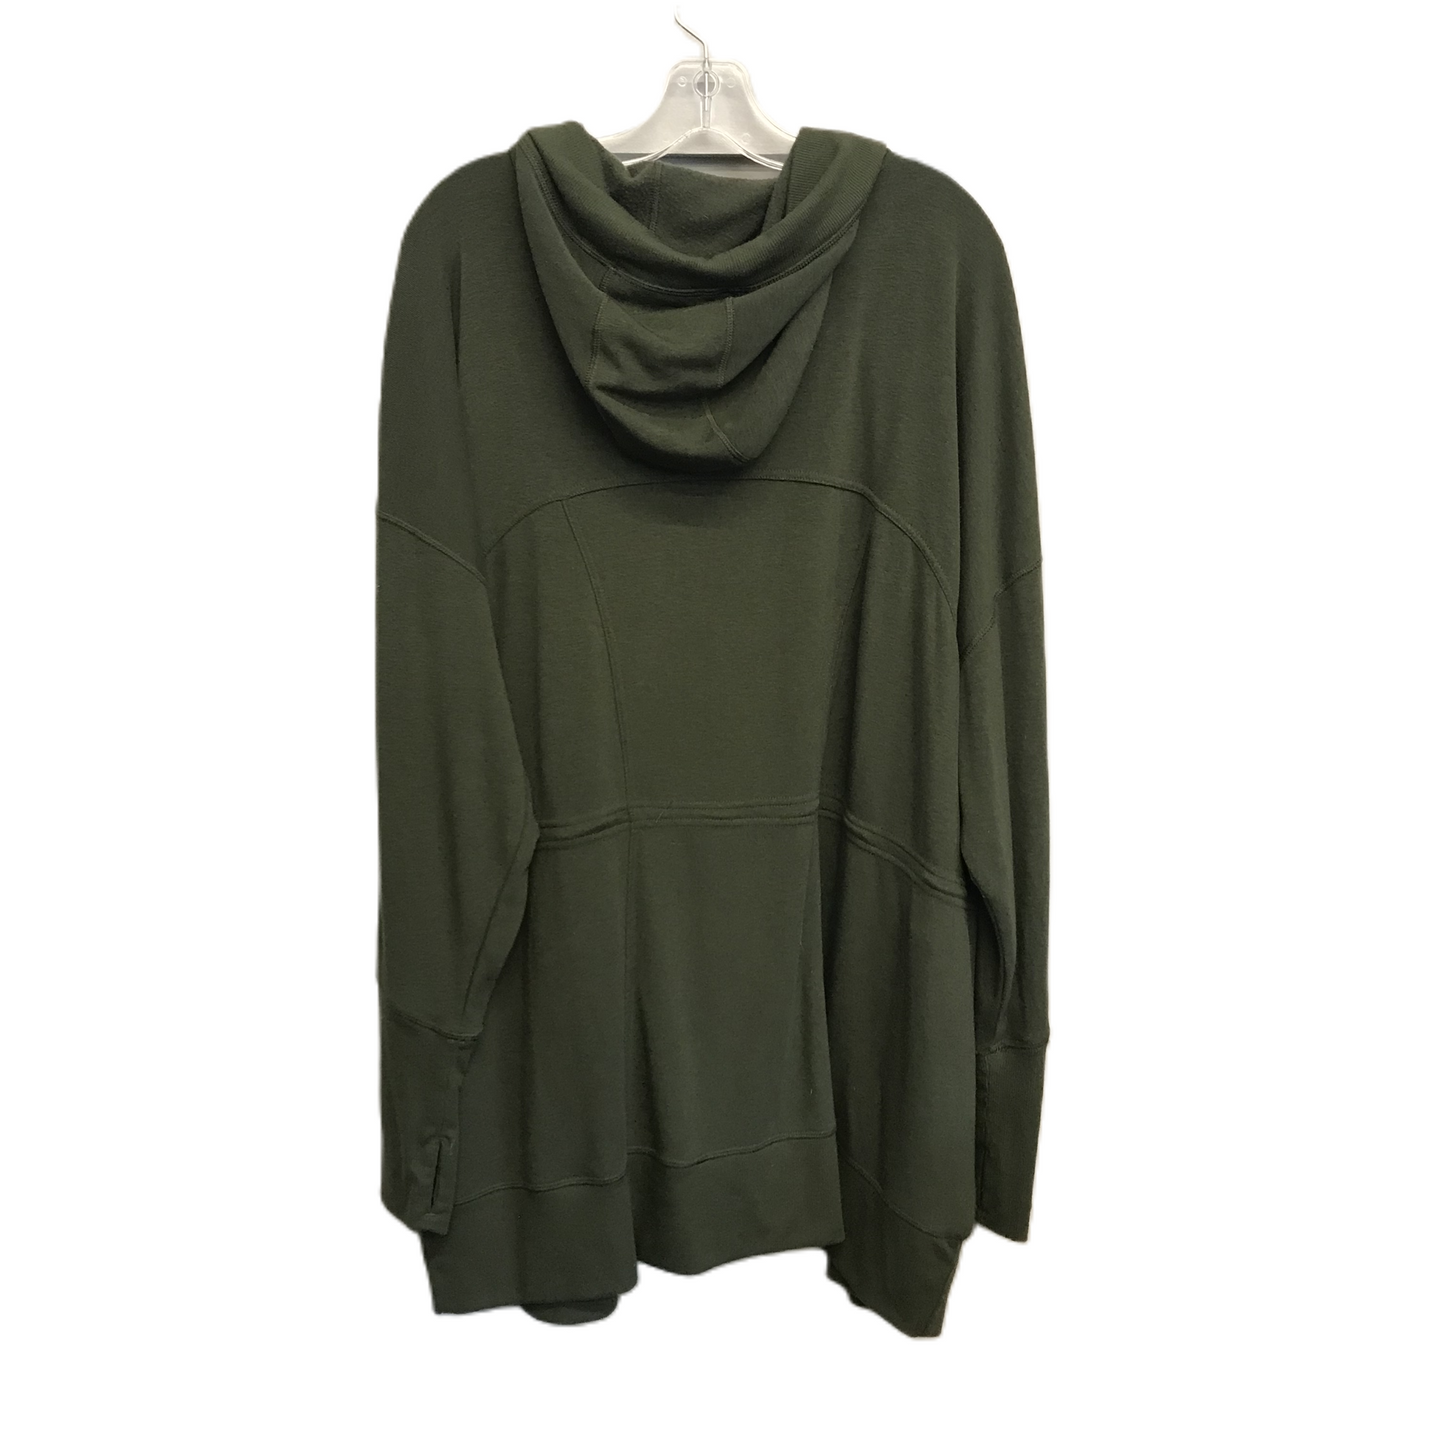 Green Sweater Cardigan By Zella, Size: 2x